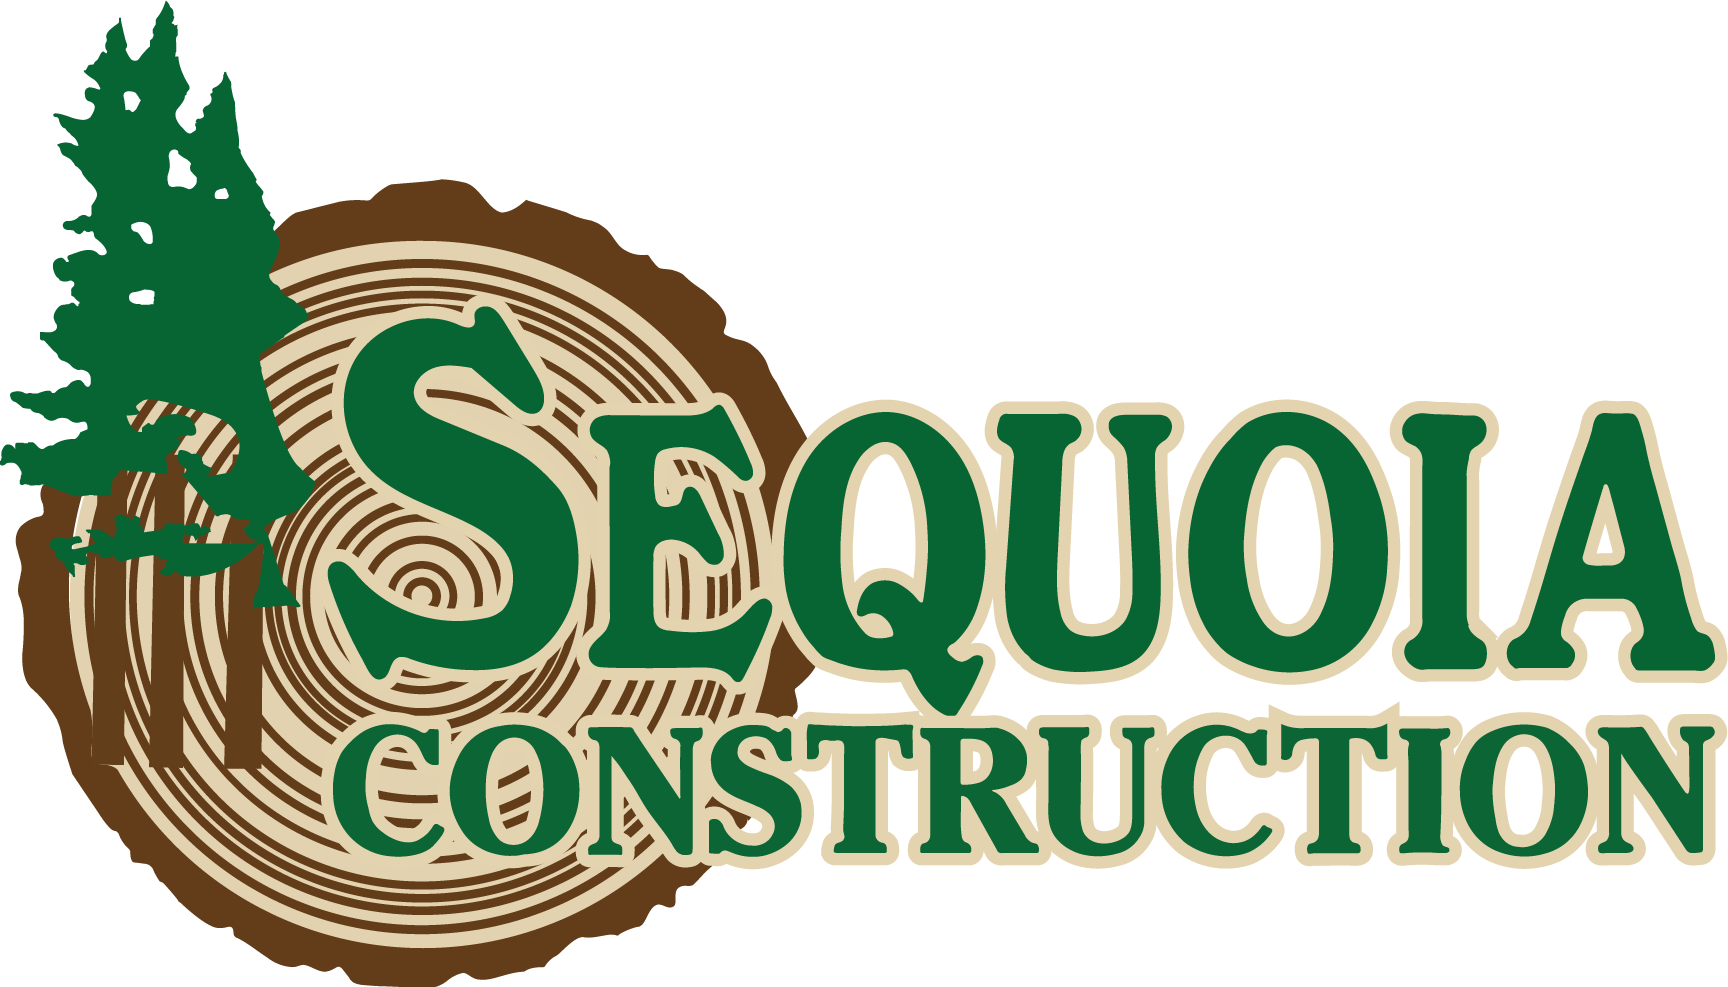 Sequoia Construction